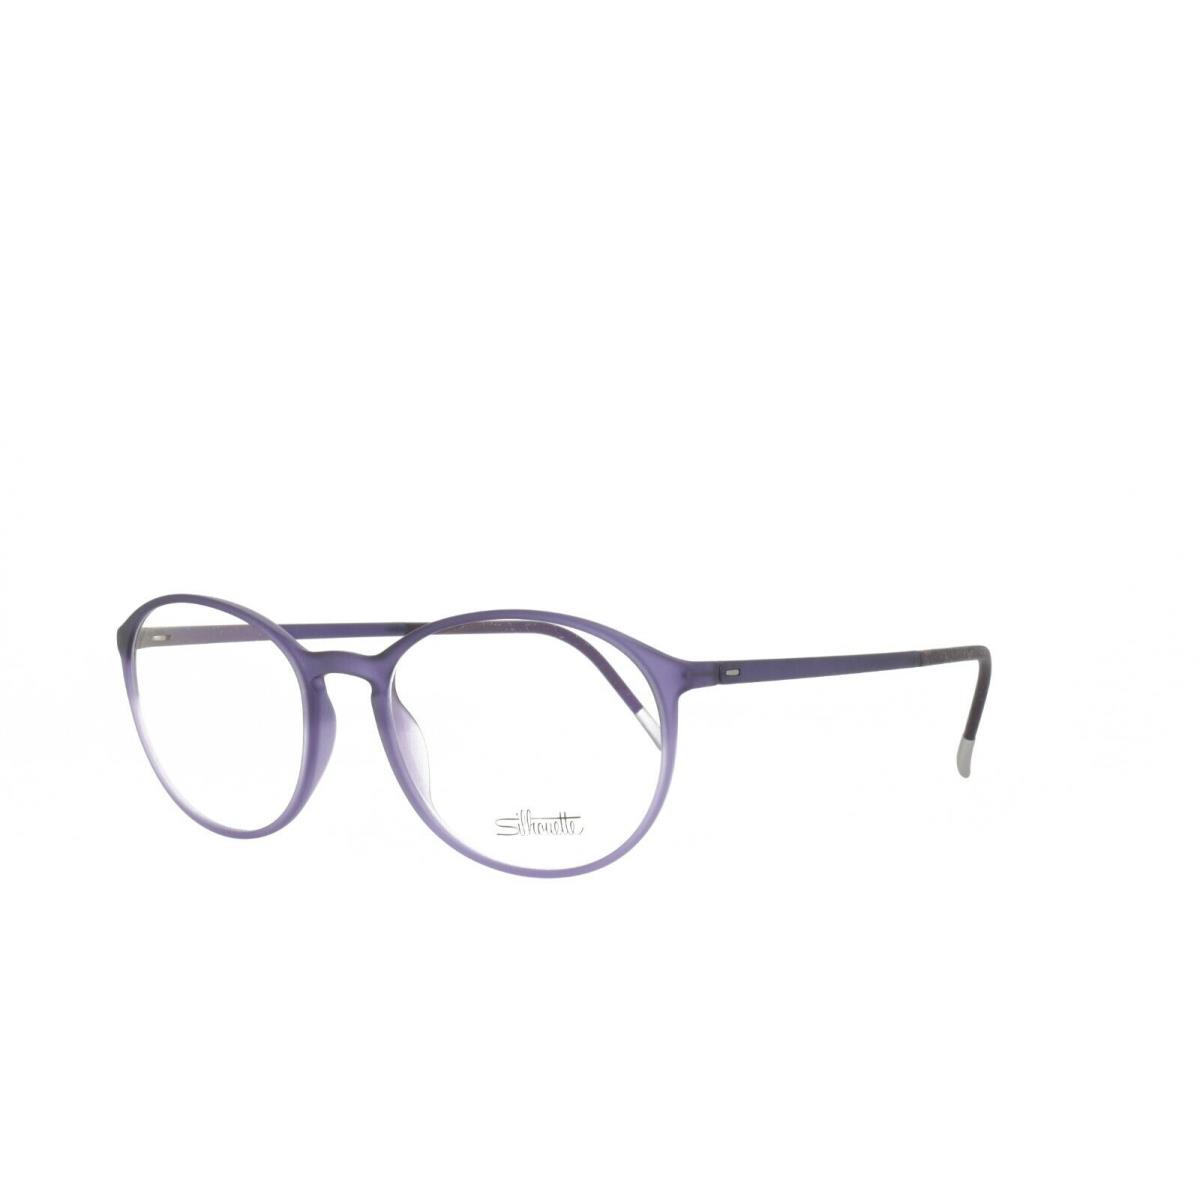 Silhouette Spx Illusion 2889 10 6120 Eyeglasses 51-18-145